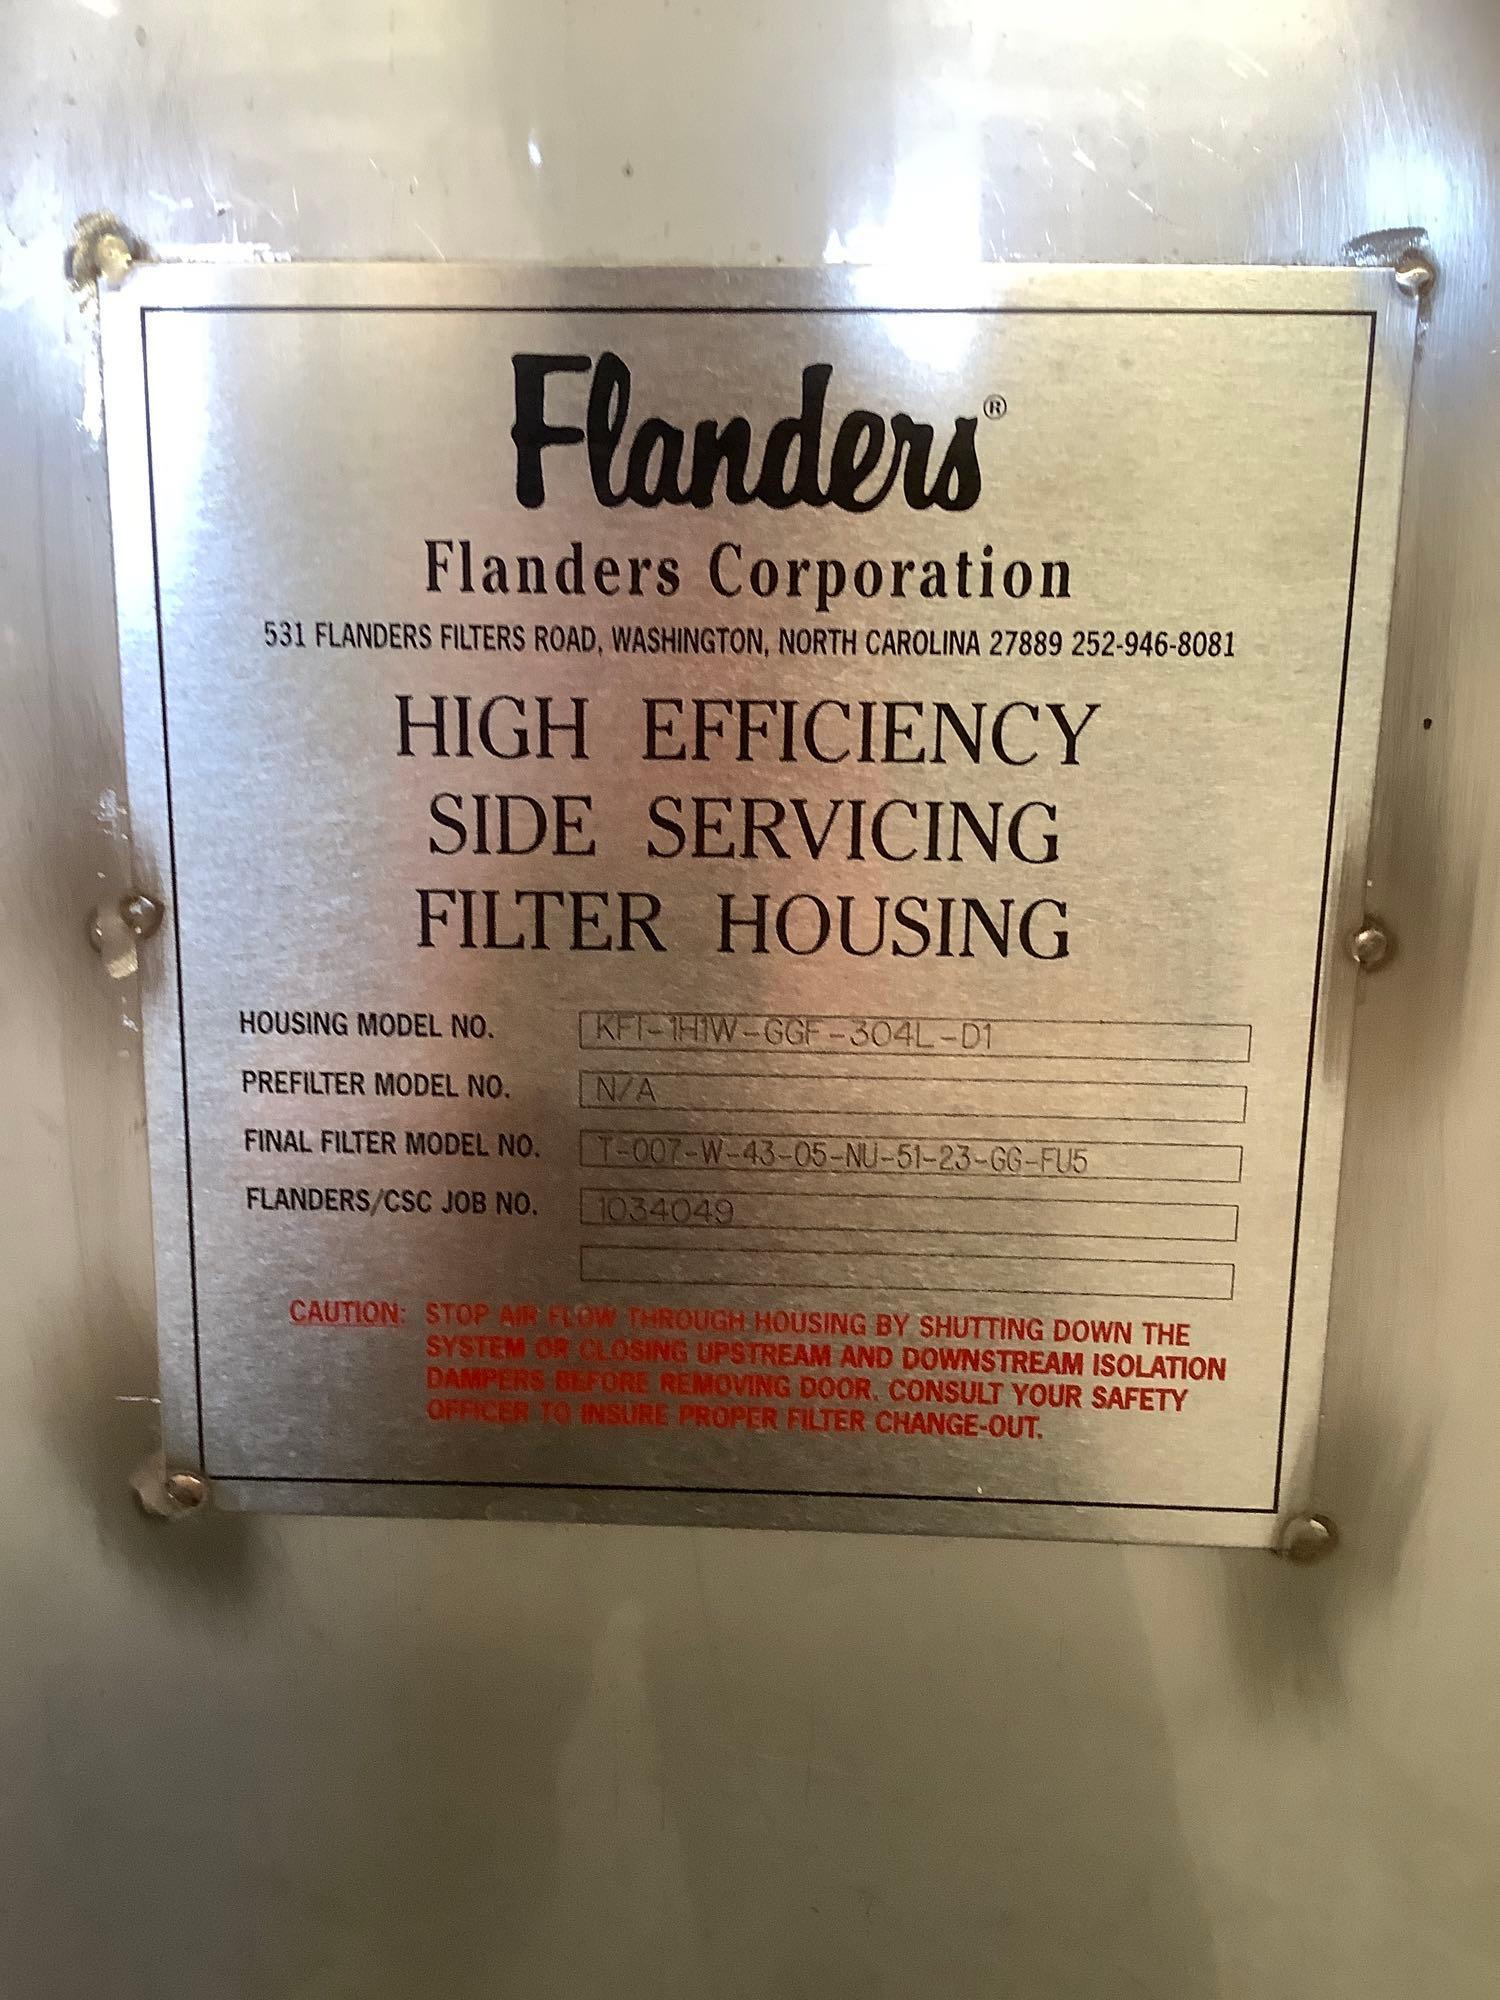 FLANDERS HIGH EFFICIENCY SIDE SERVING FILTER HOUSING HOUSING MODEL KFI-1H1W-GGF-304L-D1 FINAL FIL...